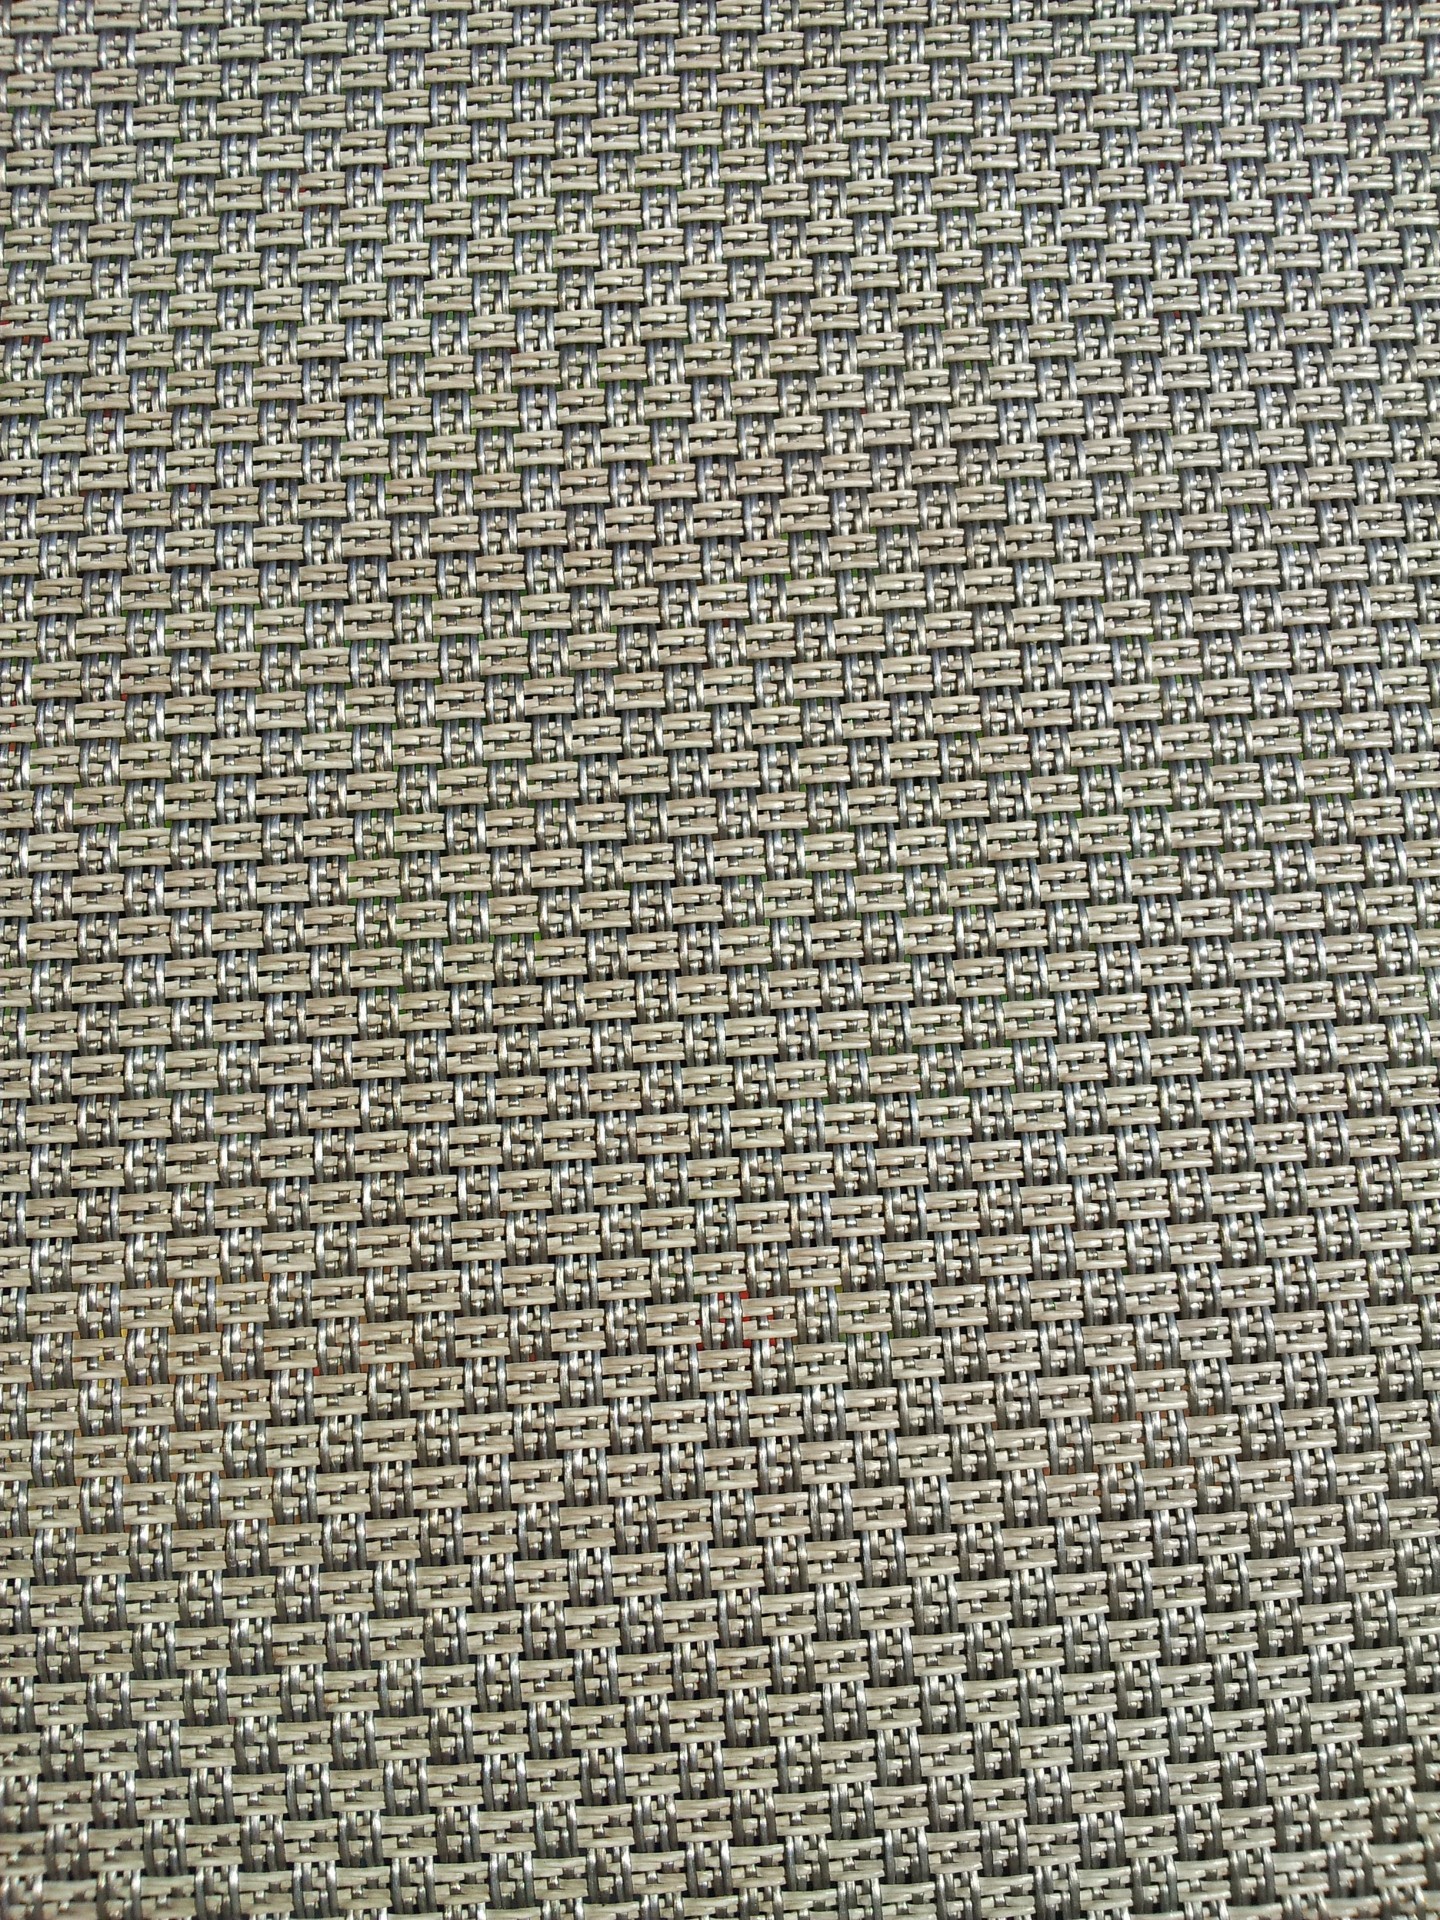 1440x1920 Stainless Steel Wallpaper